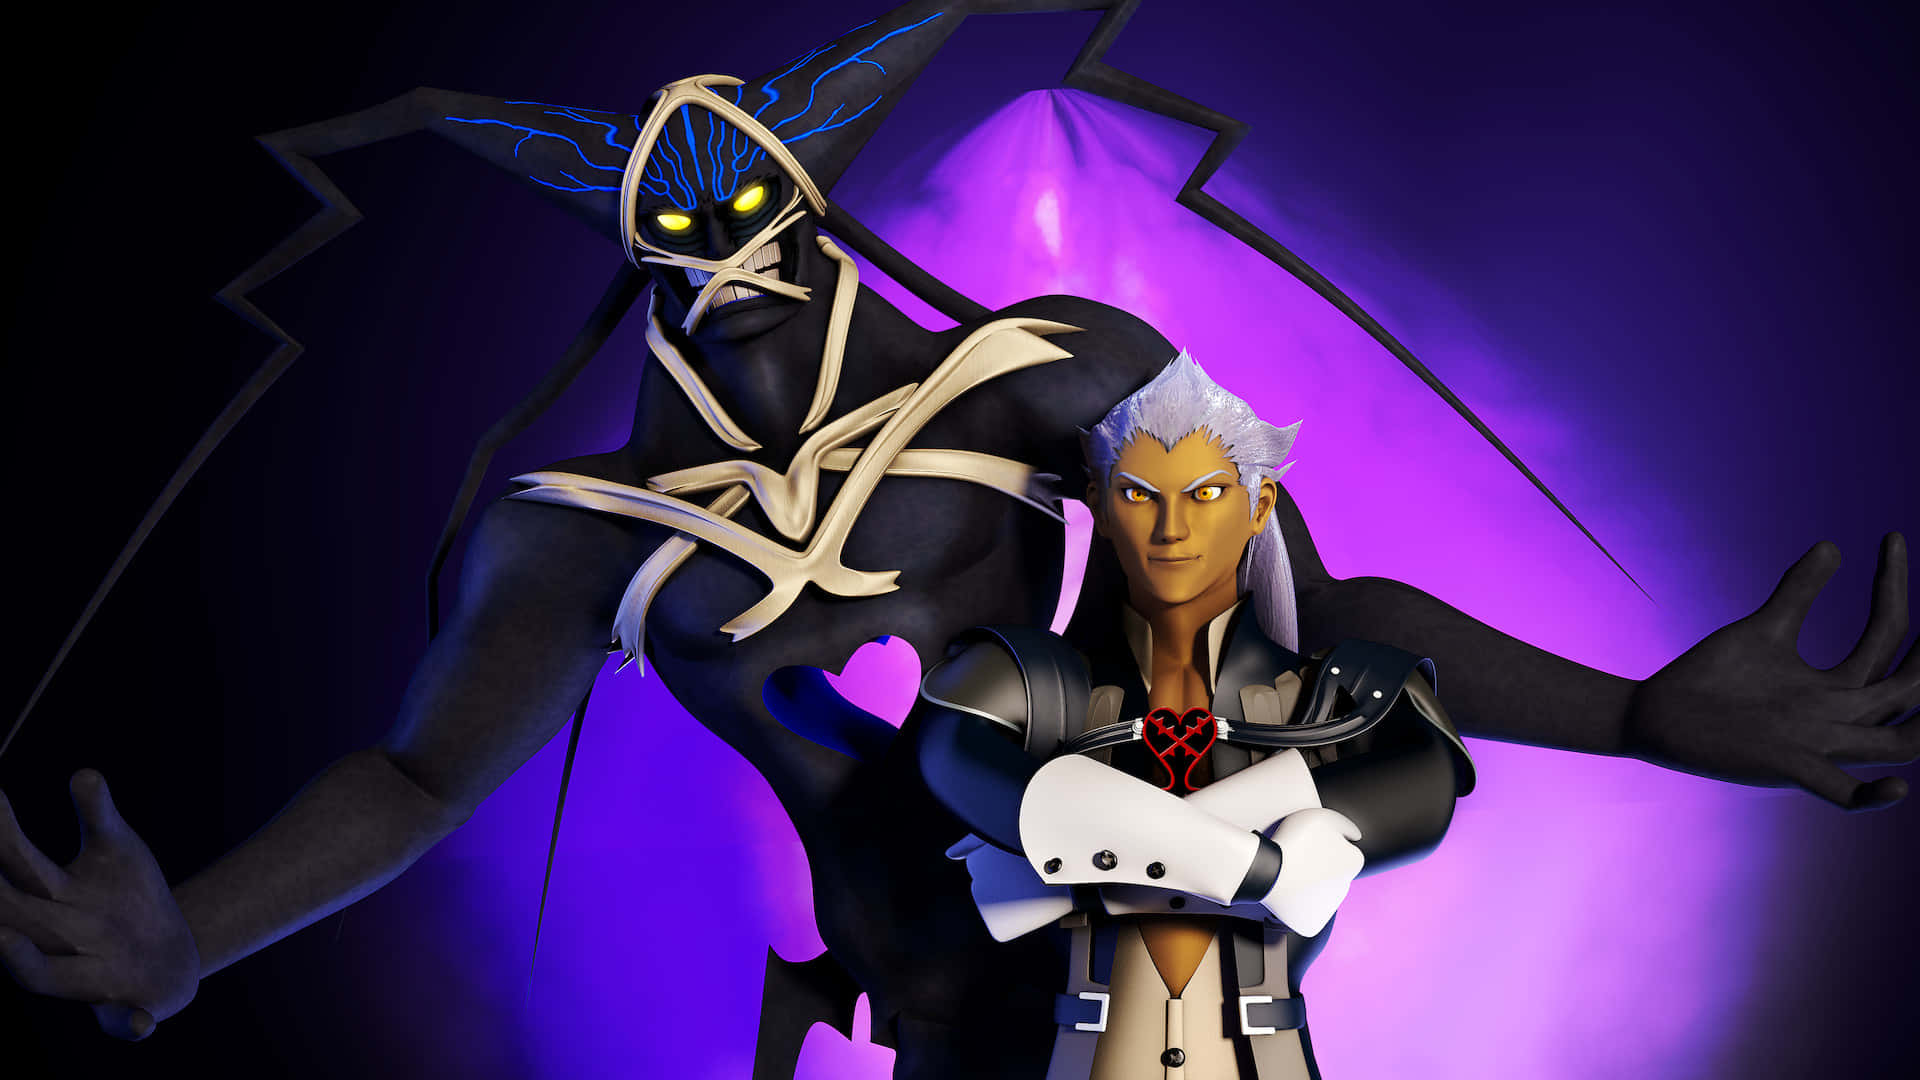 Ansem Seeker of Darkness - The Ultimate Kingdom Hearts Villain Wallpaper